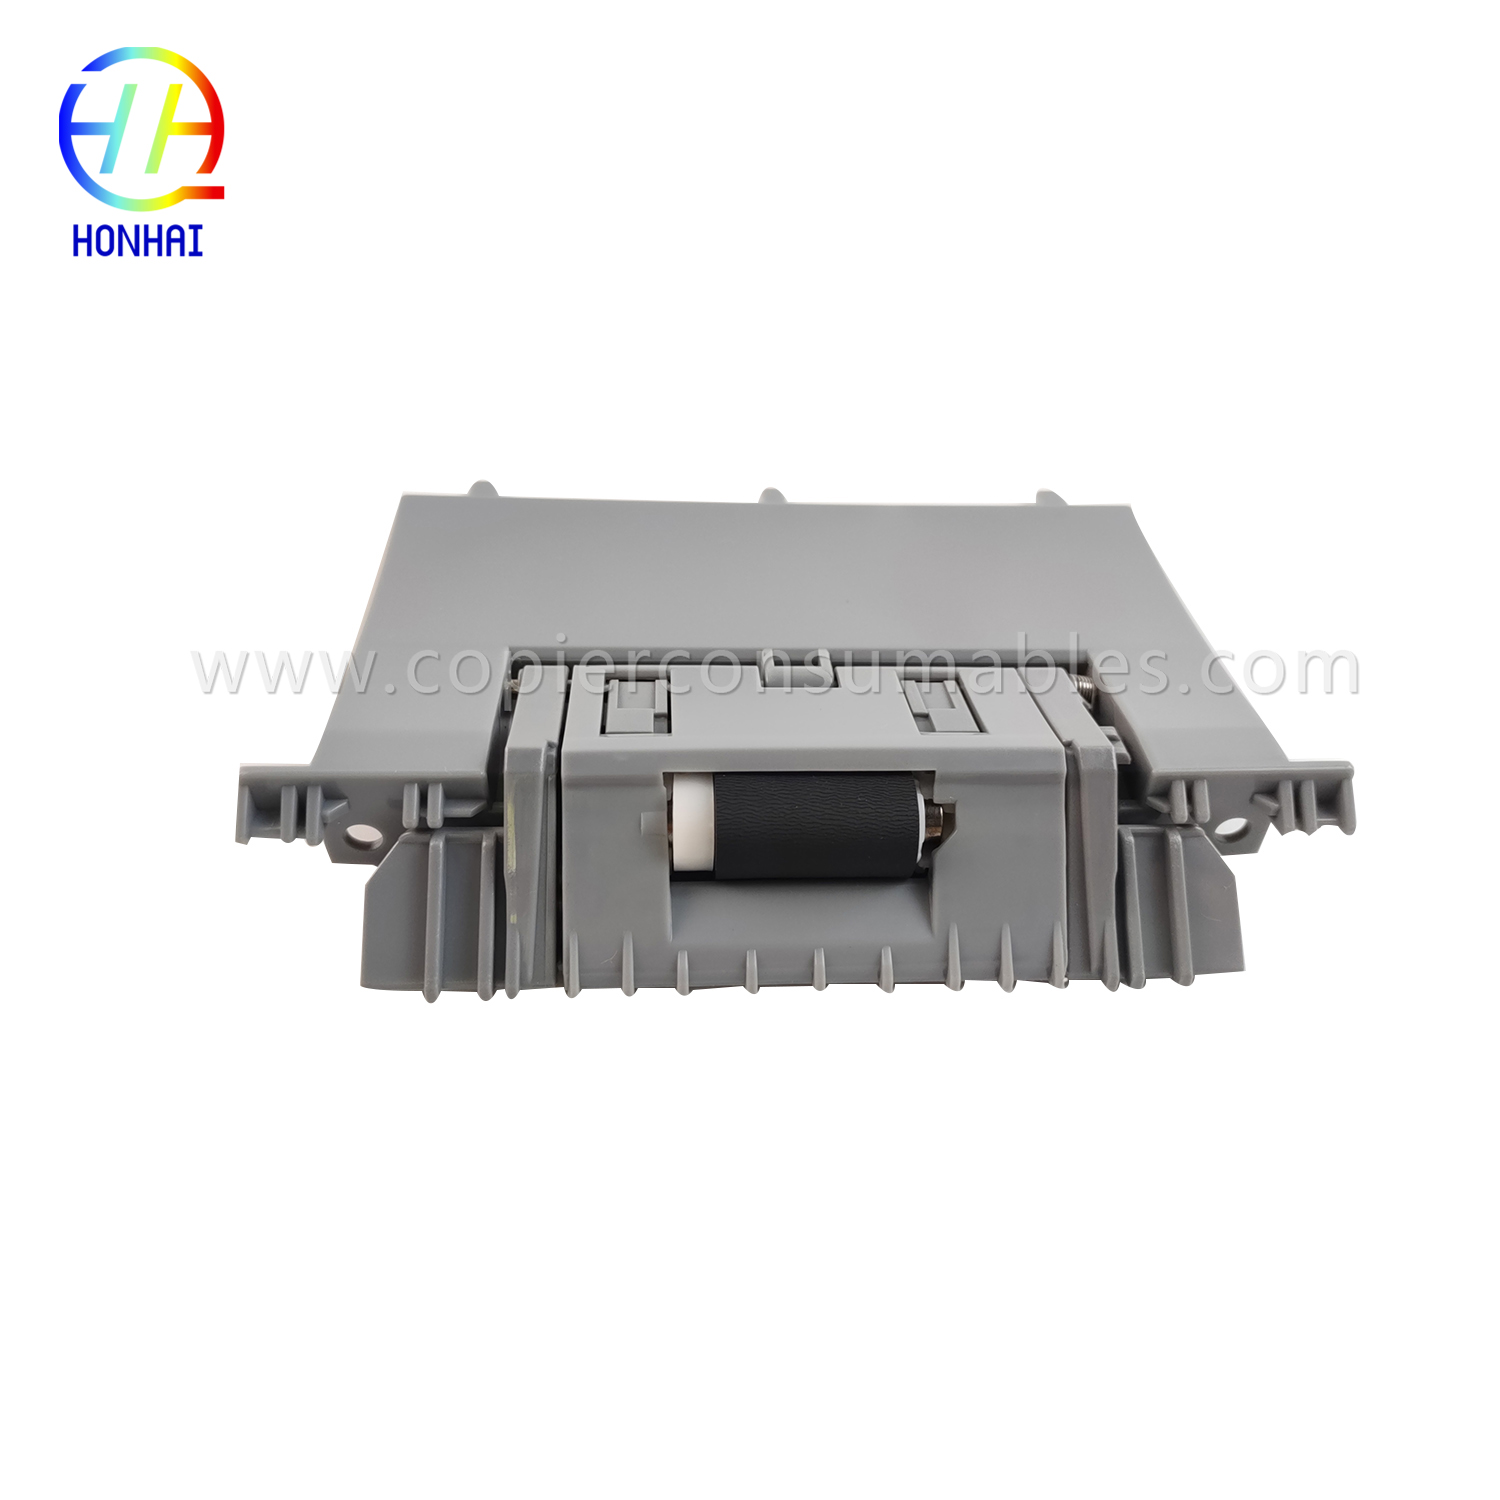 https://www.copierhonhaitech.com/sm/separation-roller-assemble-cassette-for-hp-laserjet-enterprise-500- رەڭگى